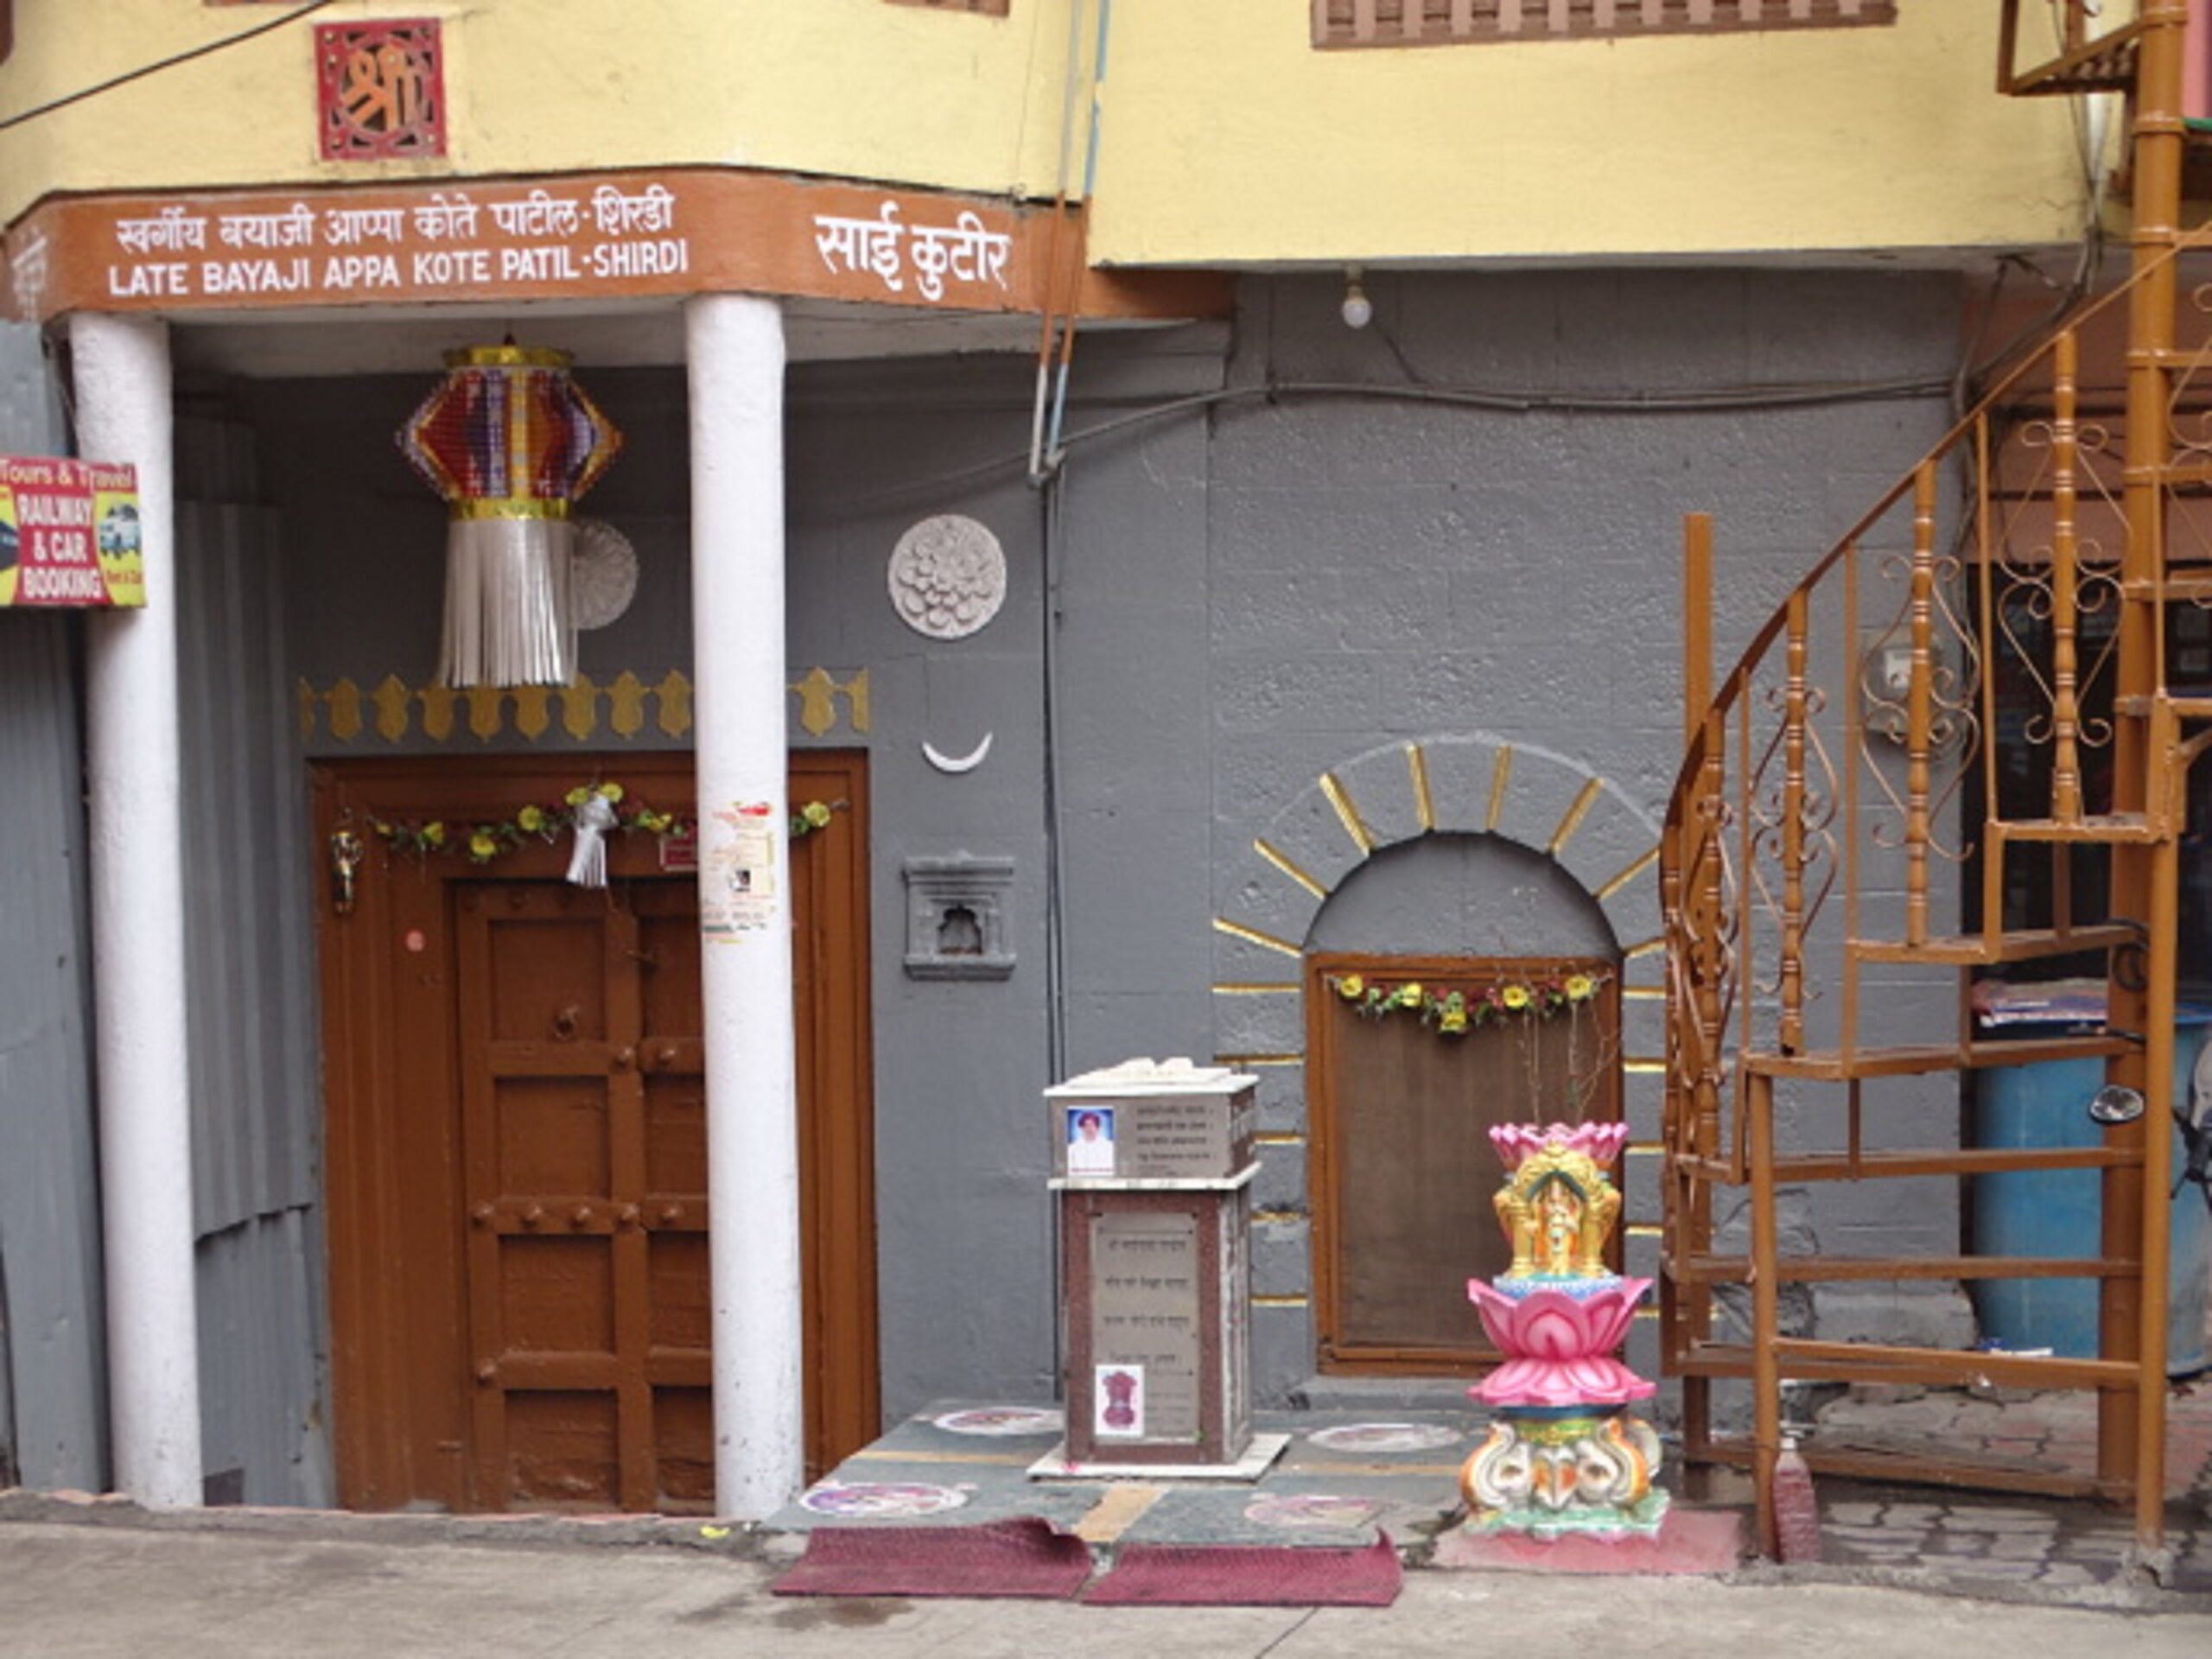 Sai Kutir (Kote Galli, Shirdi, Maharashtra) - House of Late Bayaji Appa Kote Patil